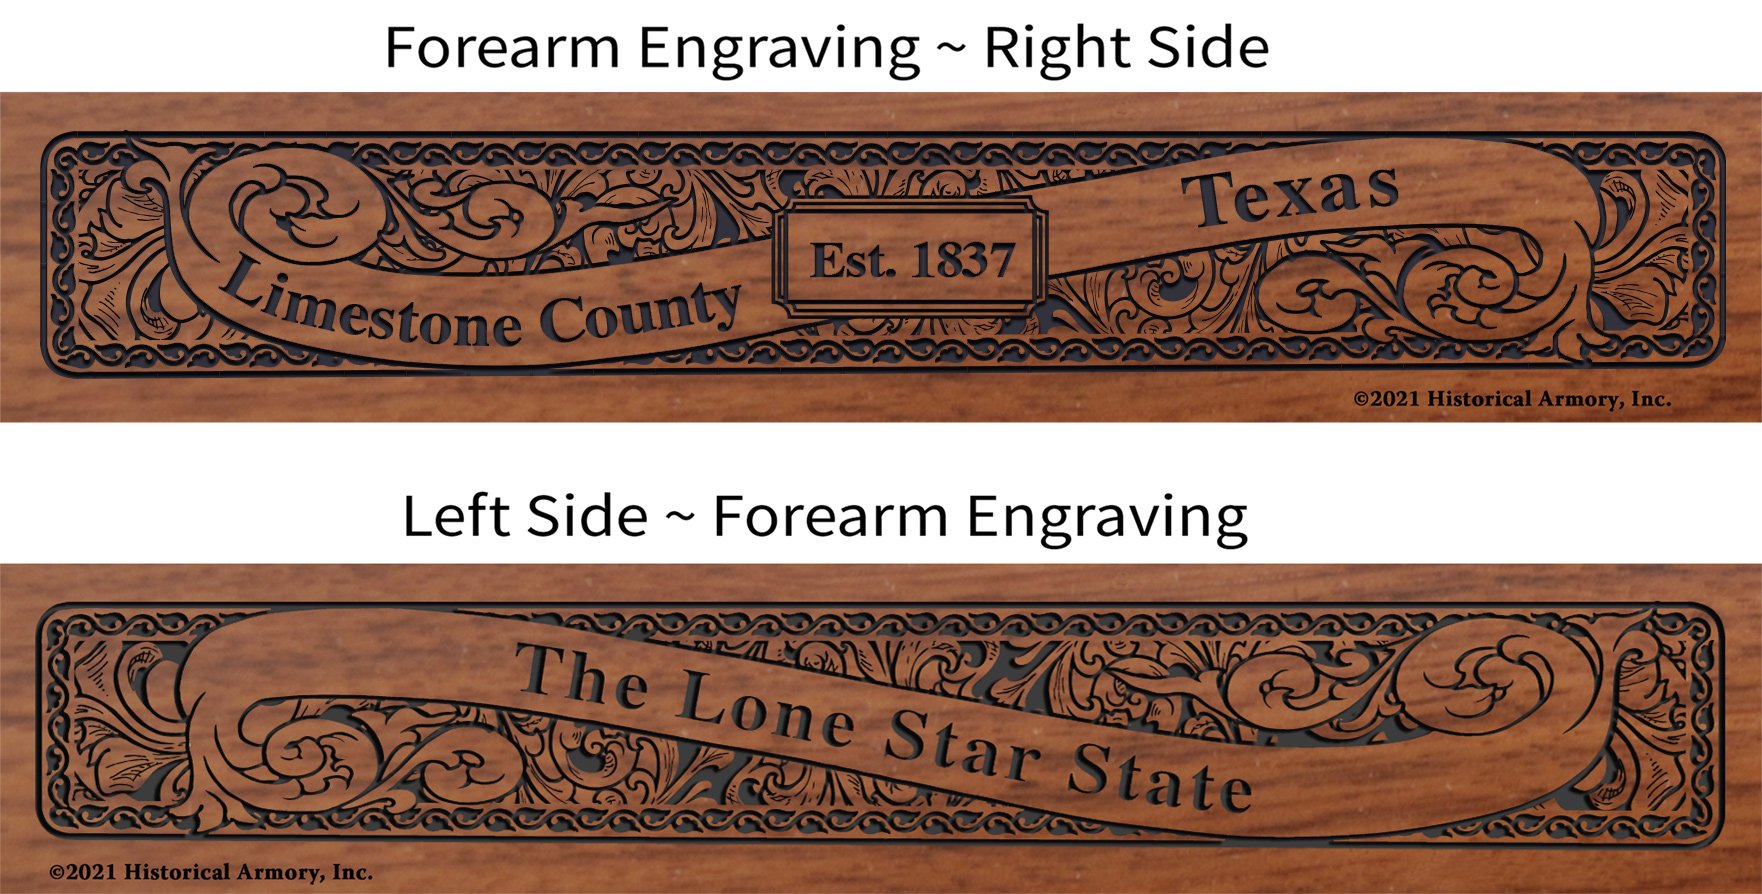 Limestone County Texas Establishment and Motto History Engraved Rifle Forearm